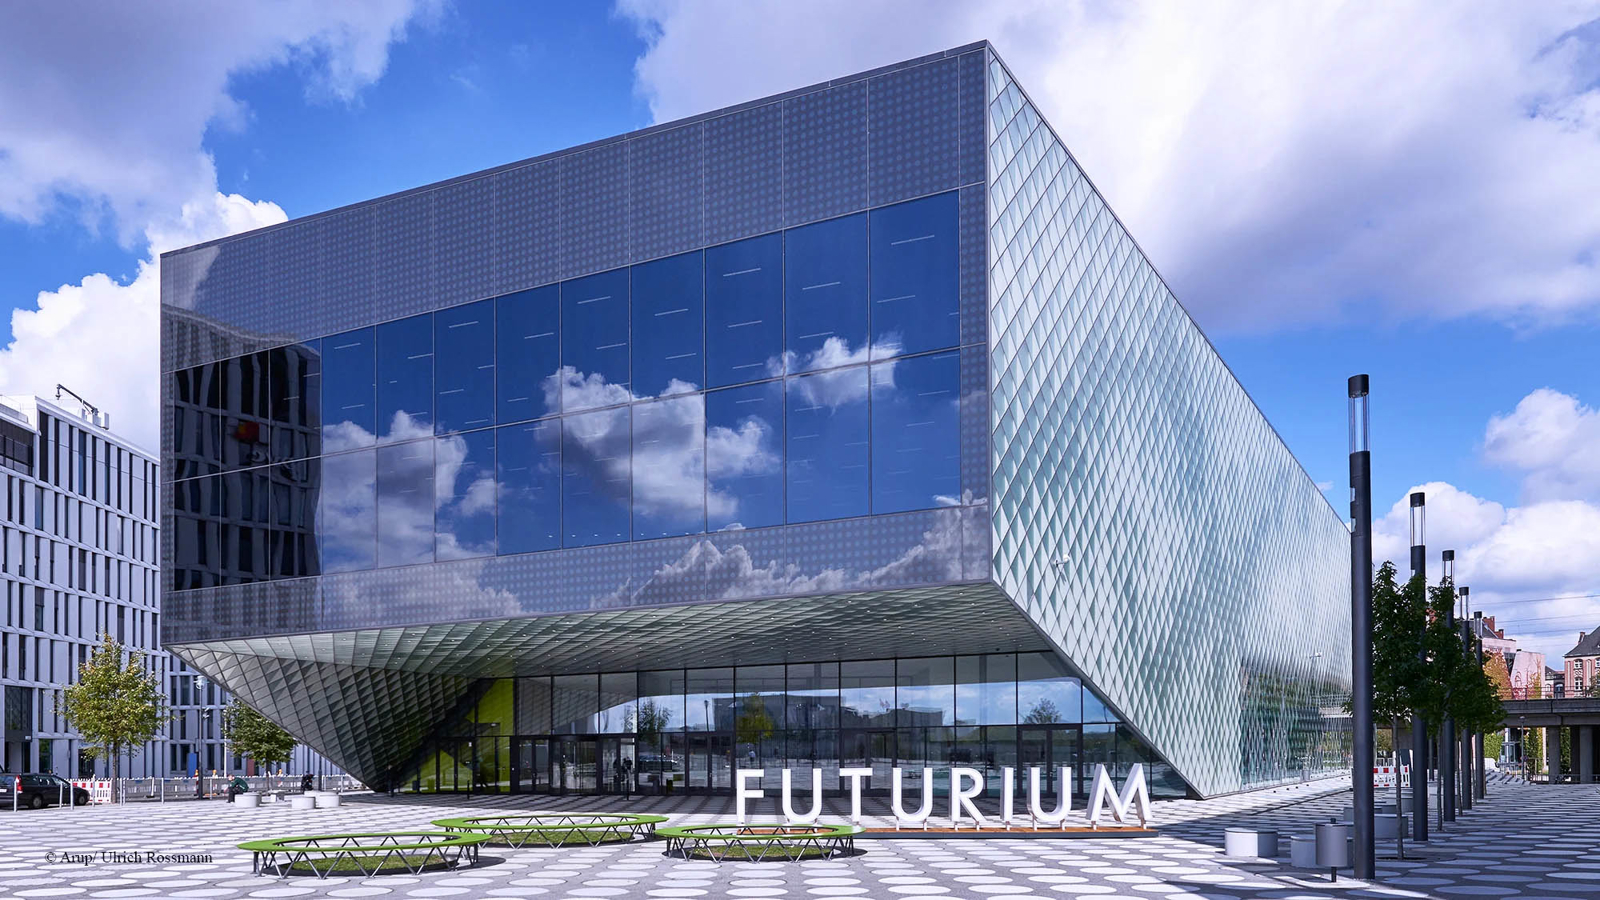 Futurium. Credit: Arup / Ulrich Rossmann